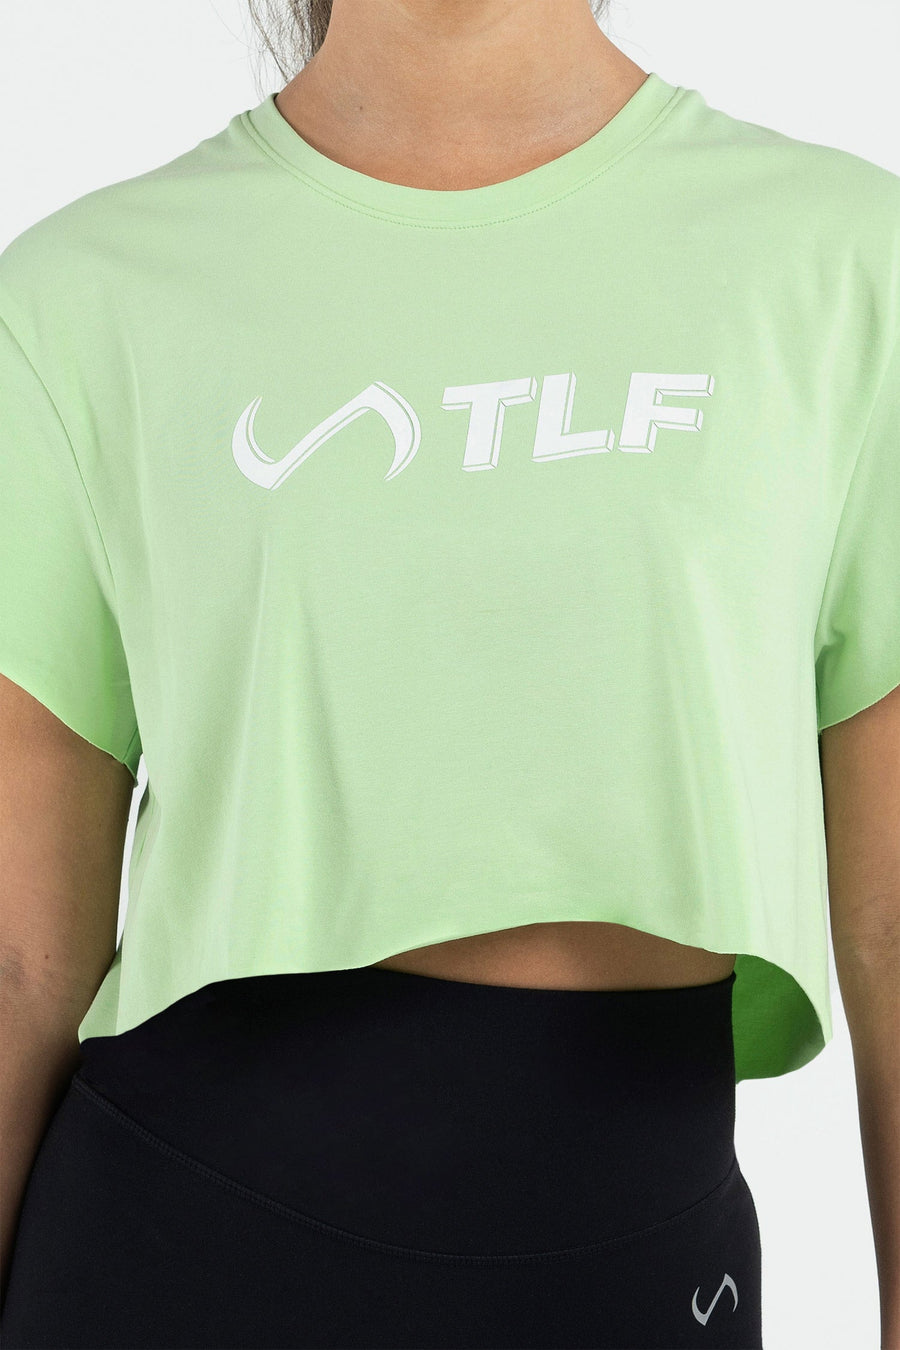 3-D Gym Crop Tee - Women's Workout Crop Tops - Neon - Lime - 4